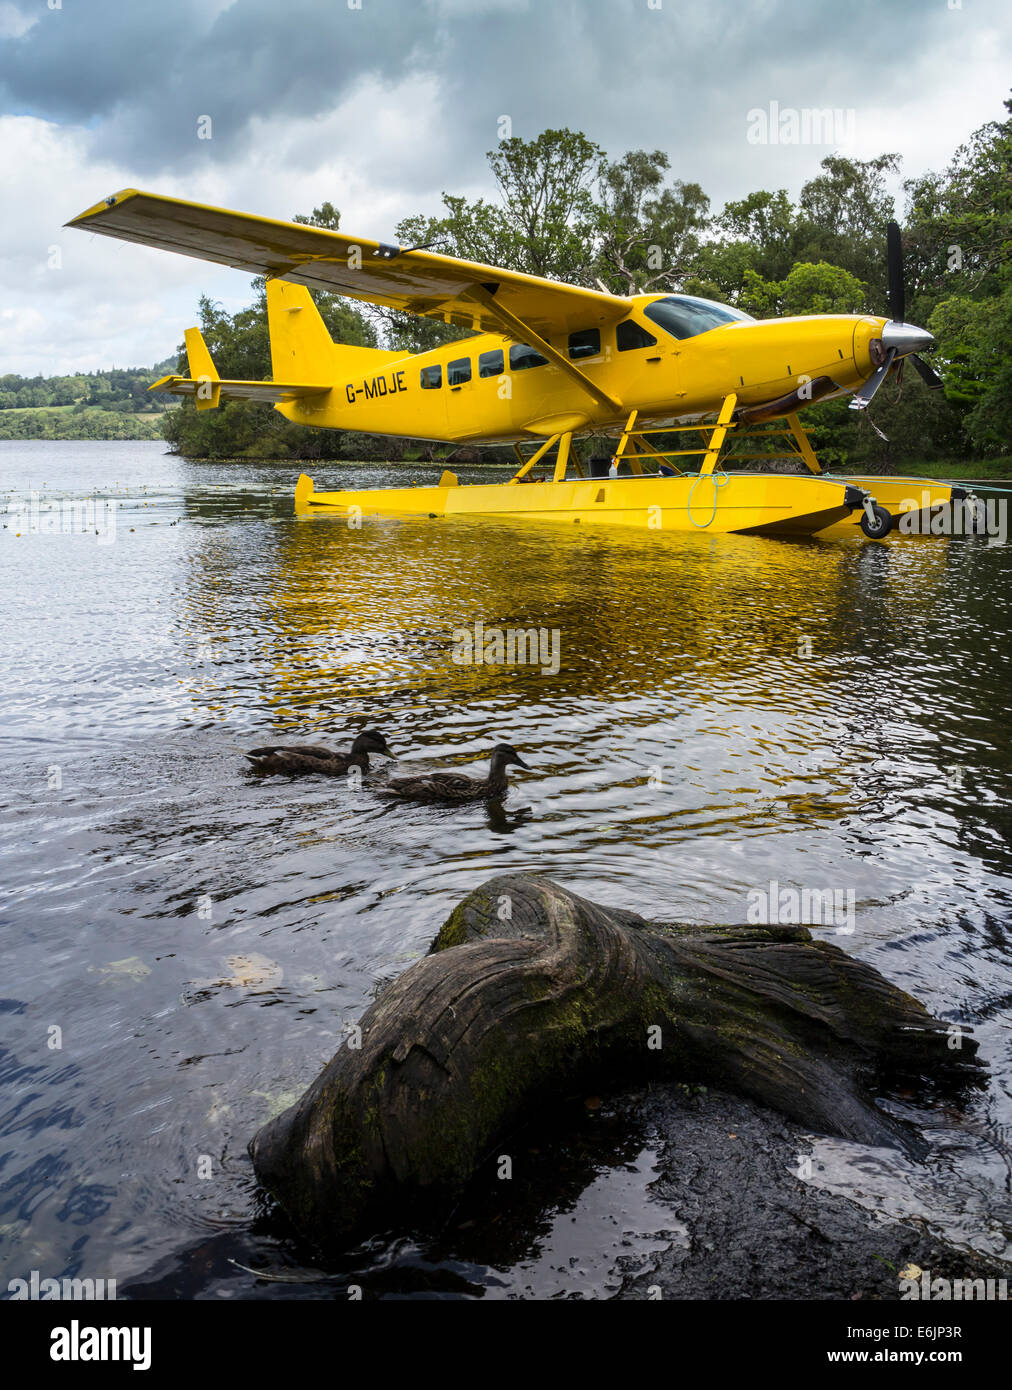 Yellow Cessna C208 Caravan Amphibian Seaplane, Loch Lomond, Scotland. Stock Photo